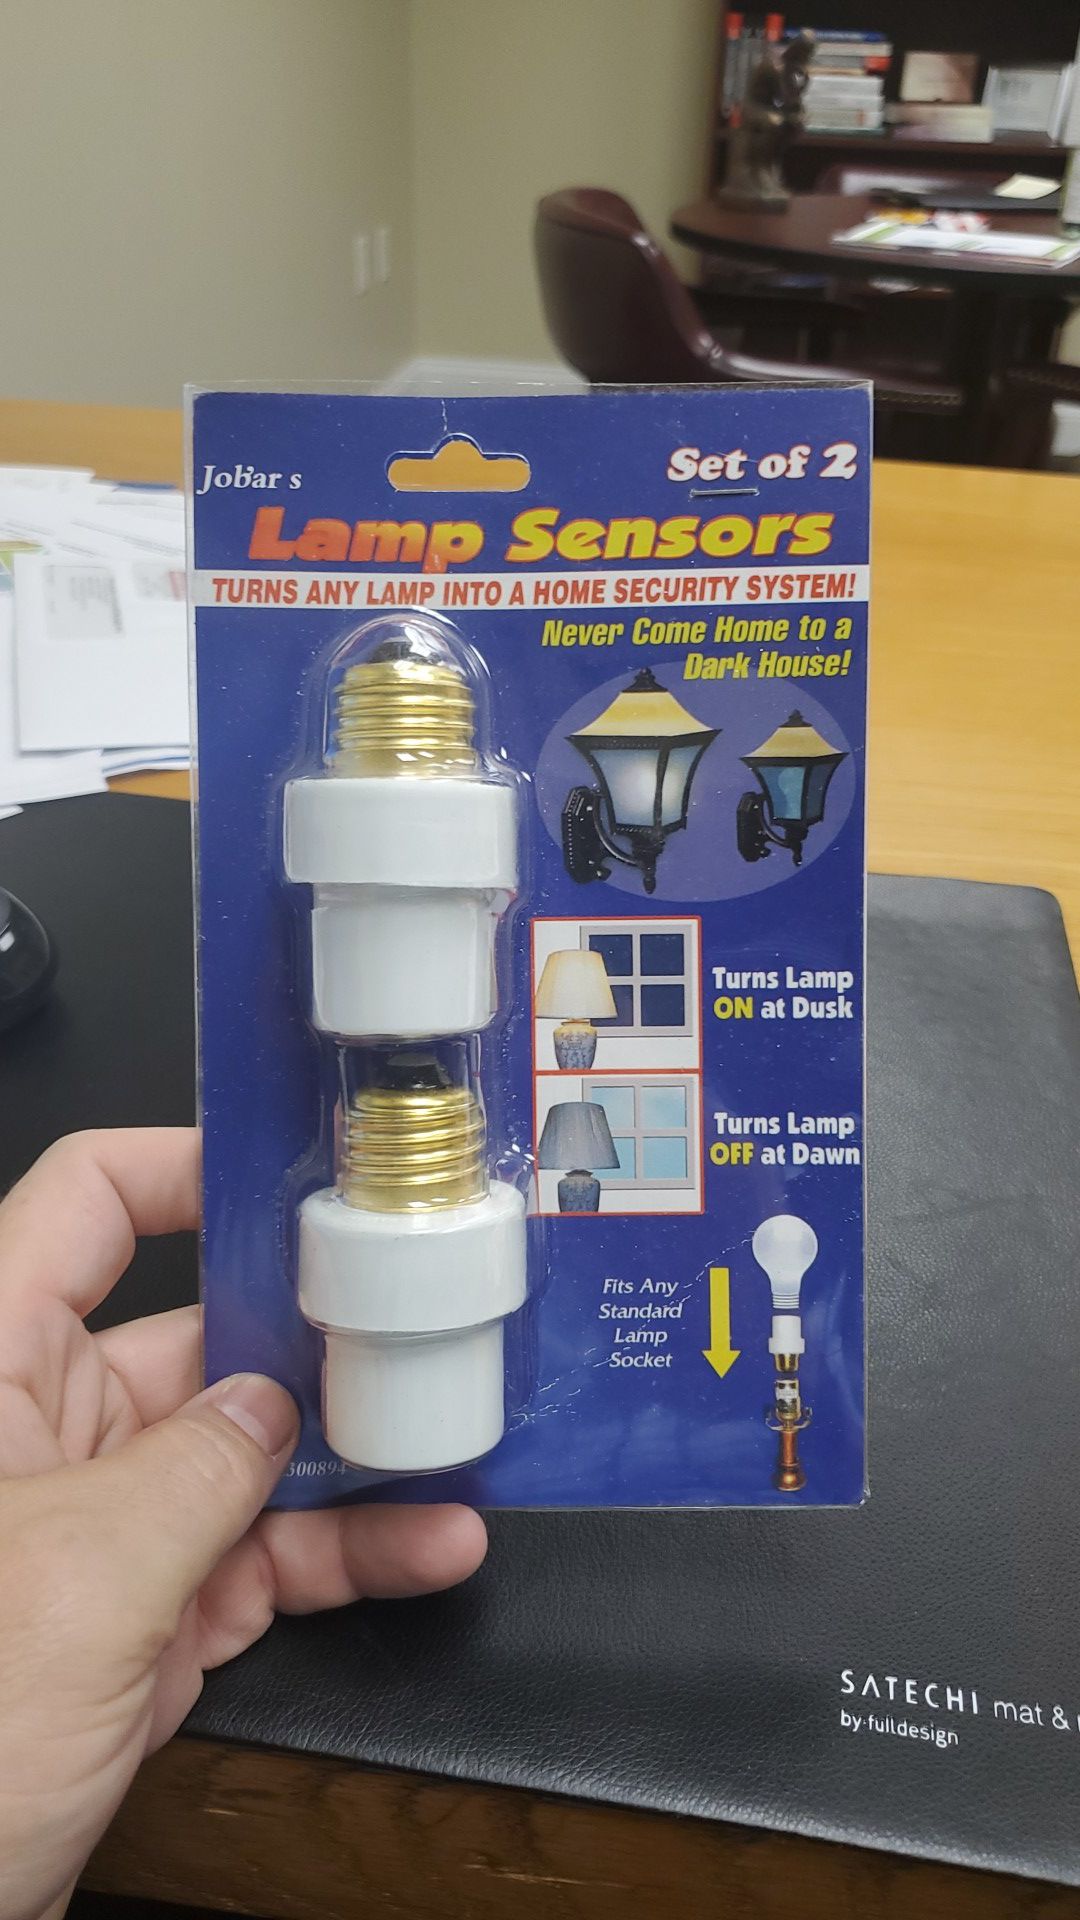 Light lamp sensors